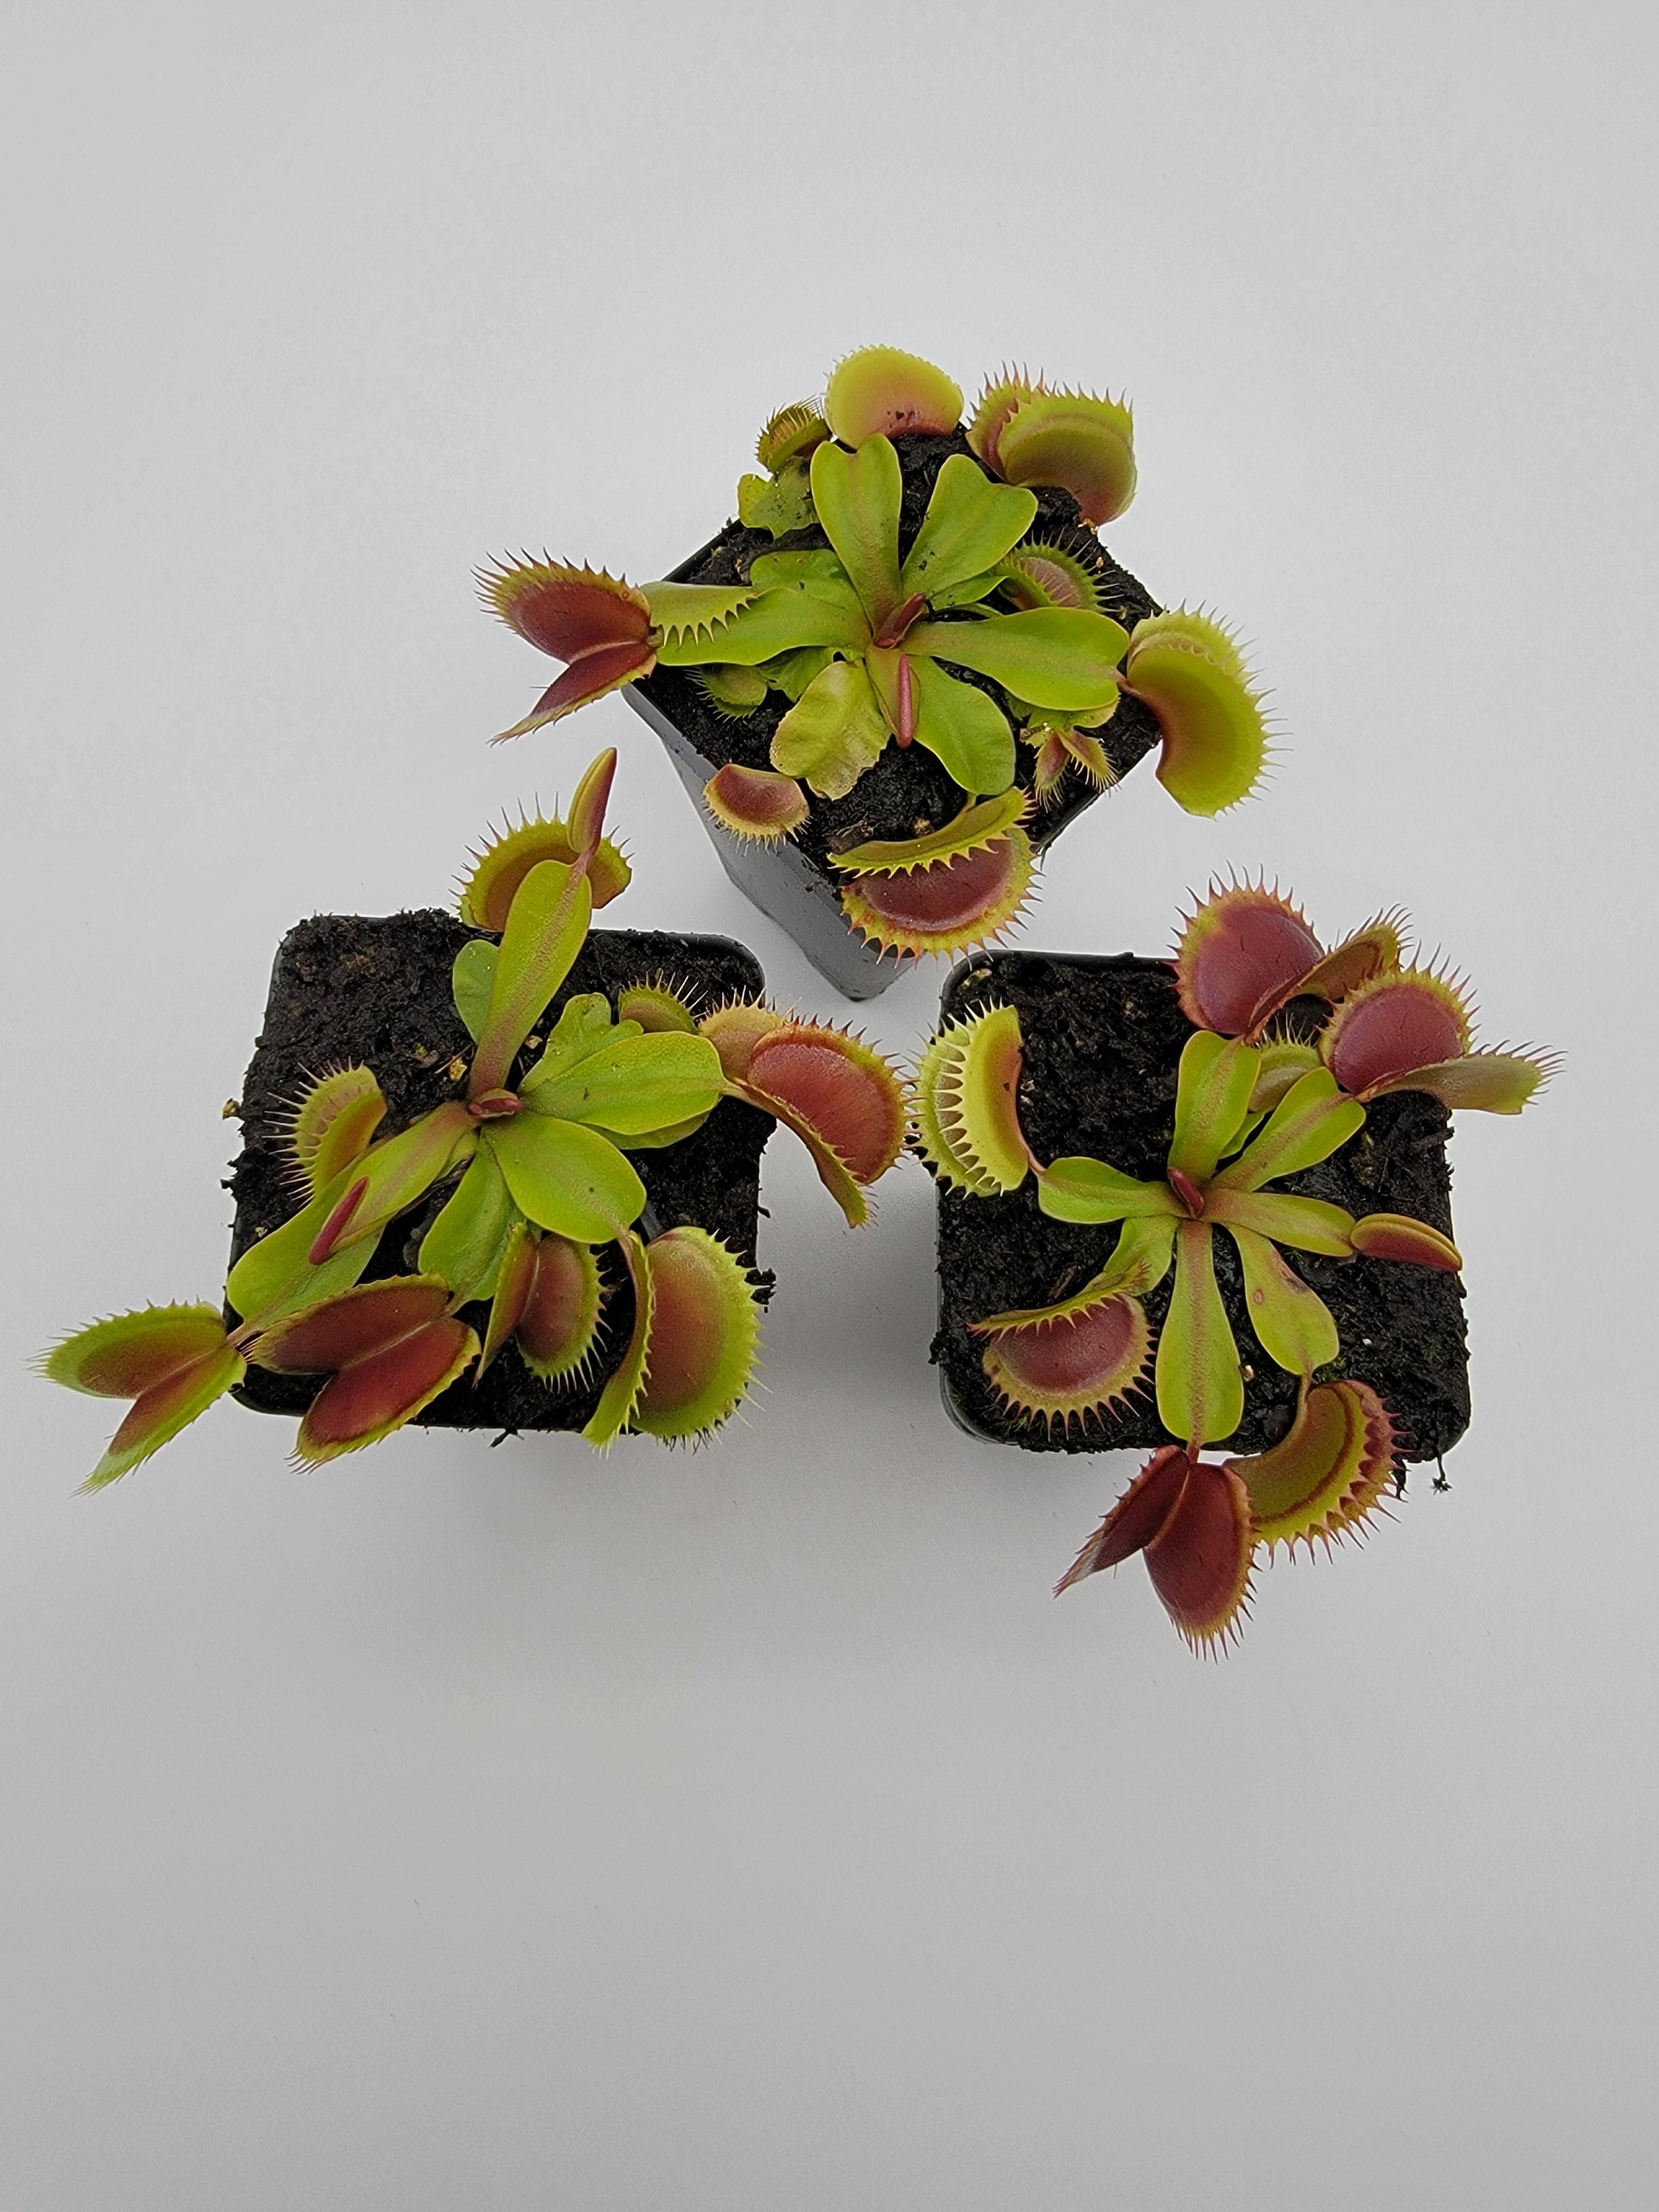 Venus flytrap (Dionaea muscipula) 'FTS Flaming Lips' - Rainbow Carnivorous Plants LLC